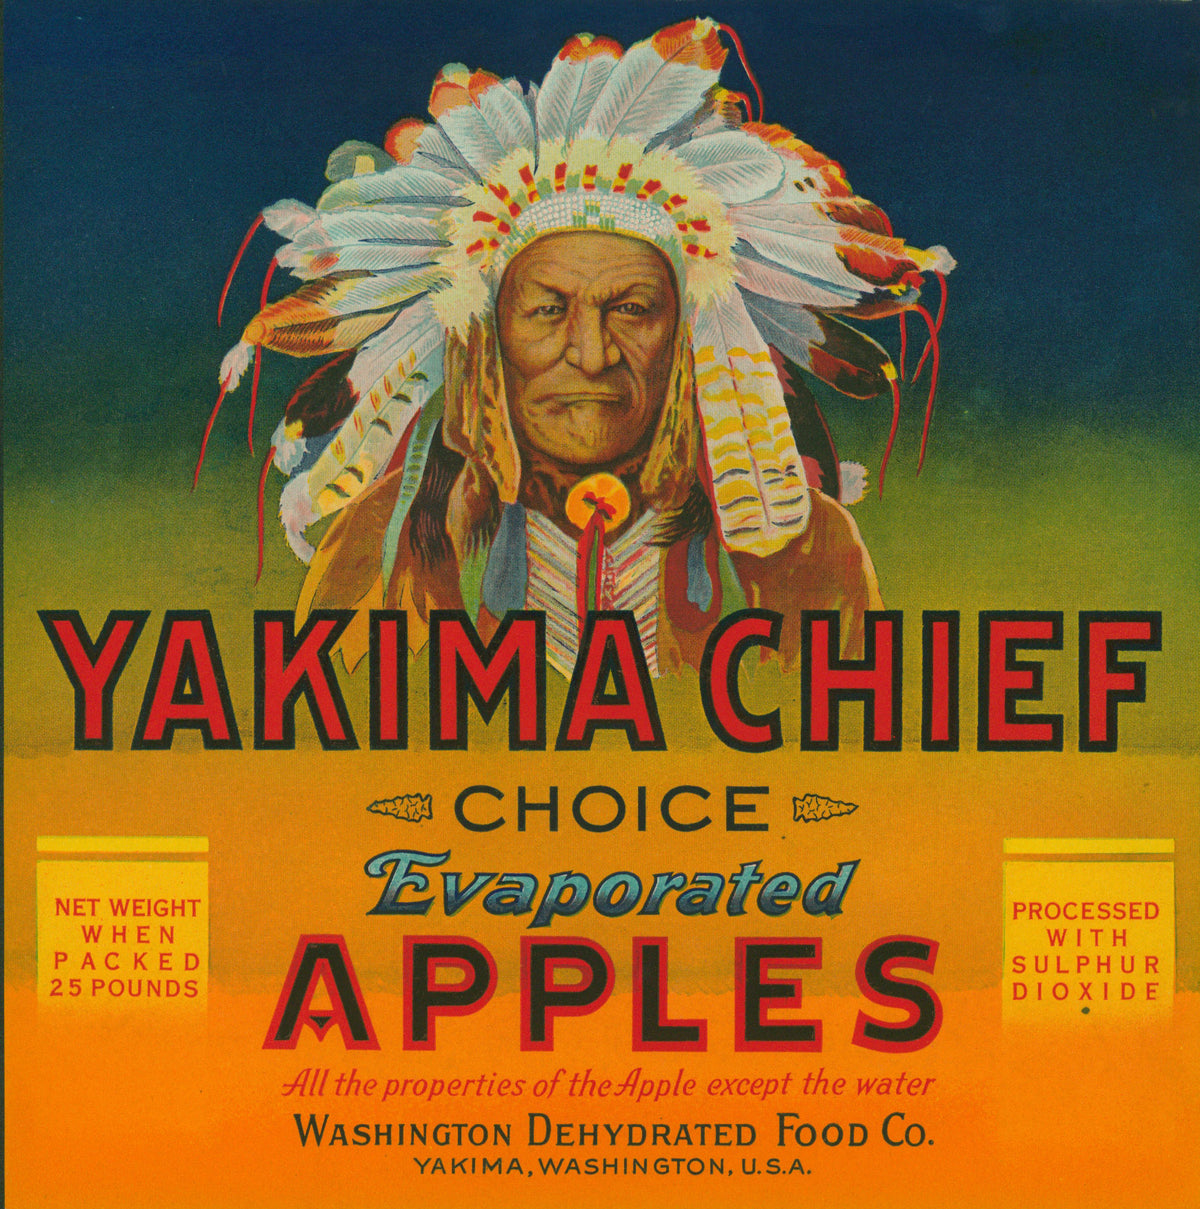 Yakima Chief Evaporated Apples- Crate Label - Authentic Vintage Antique Print